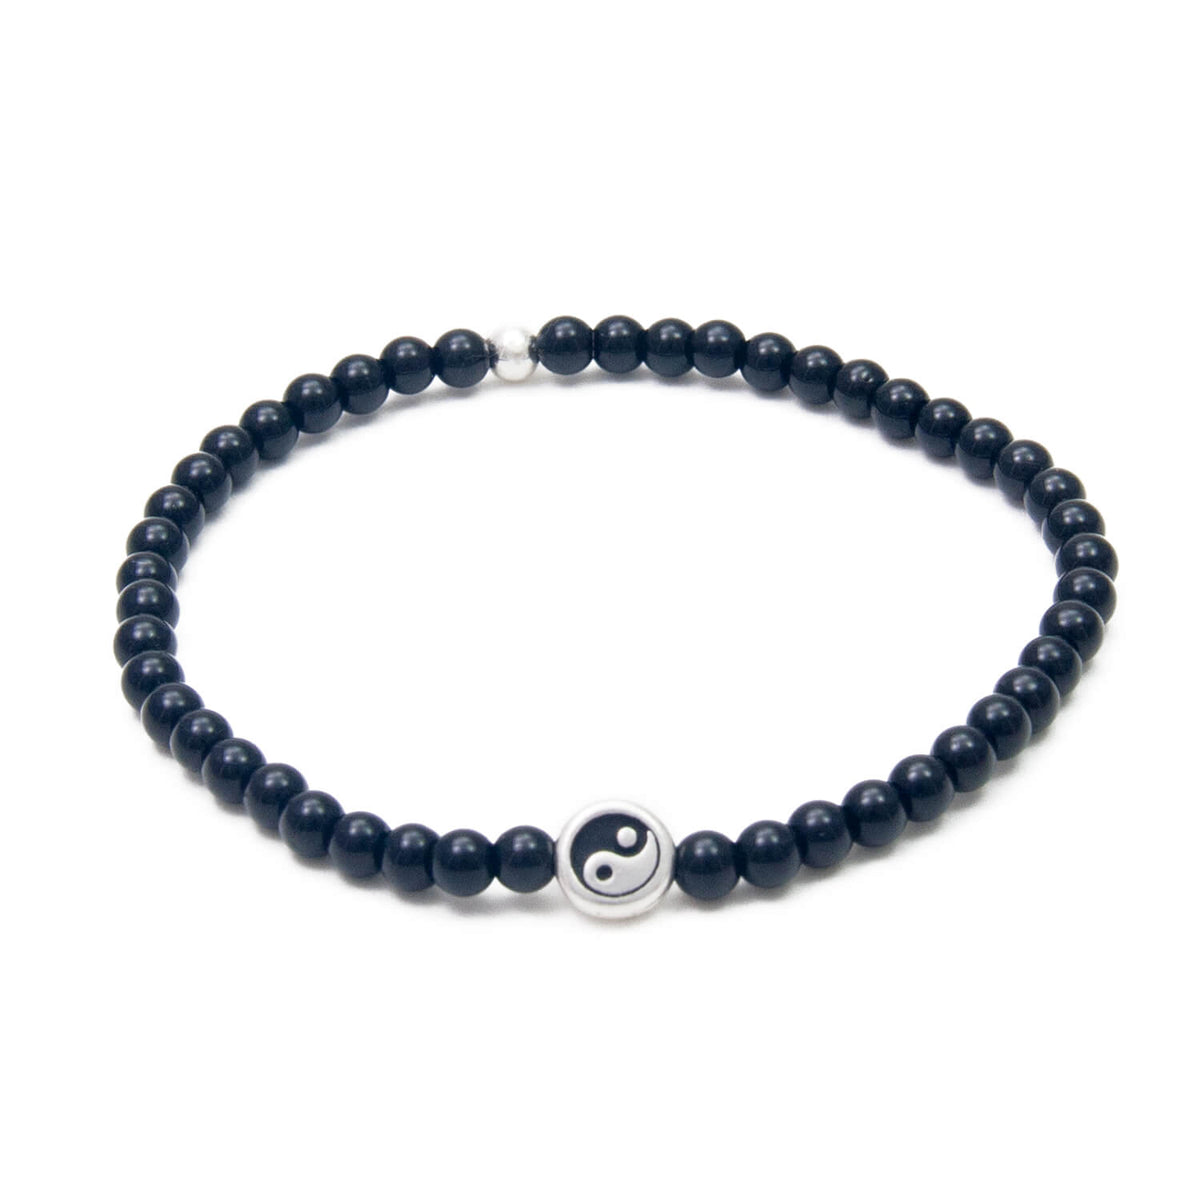 Onyx Dainty Bracelet with Yin Yang Charm, Balance